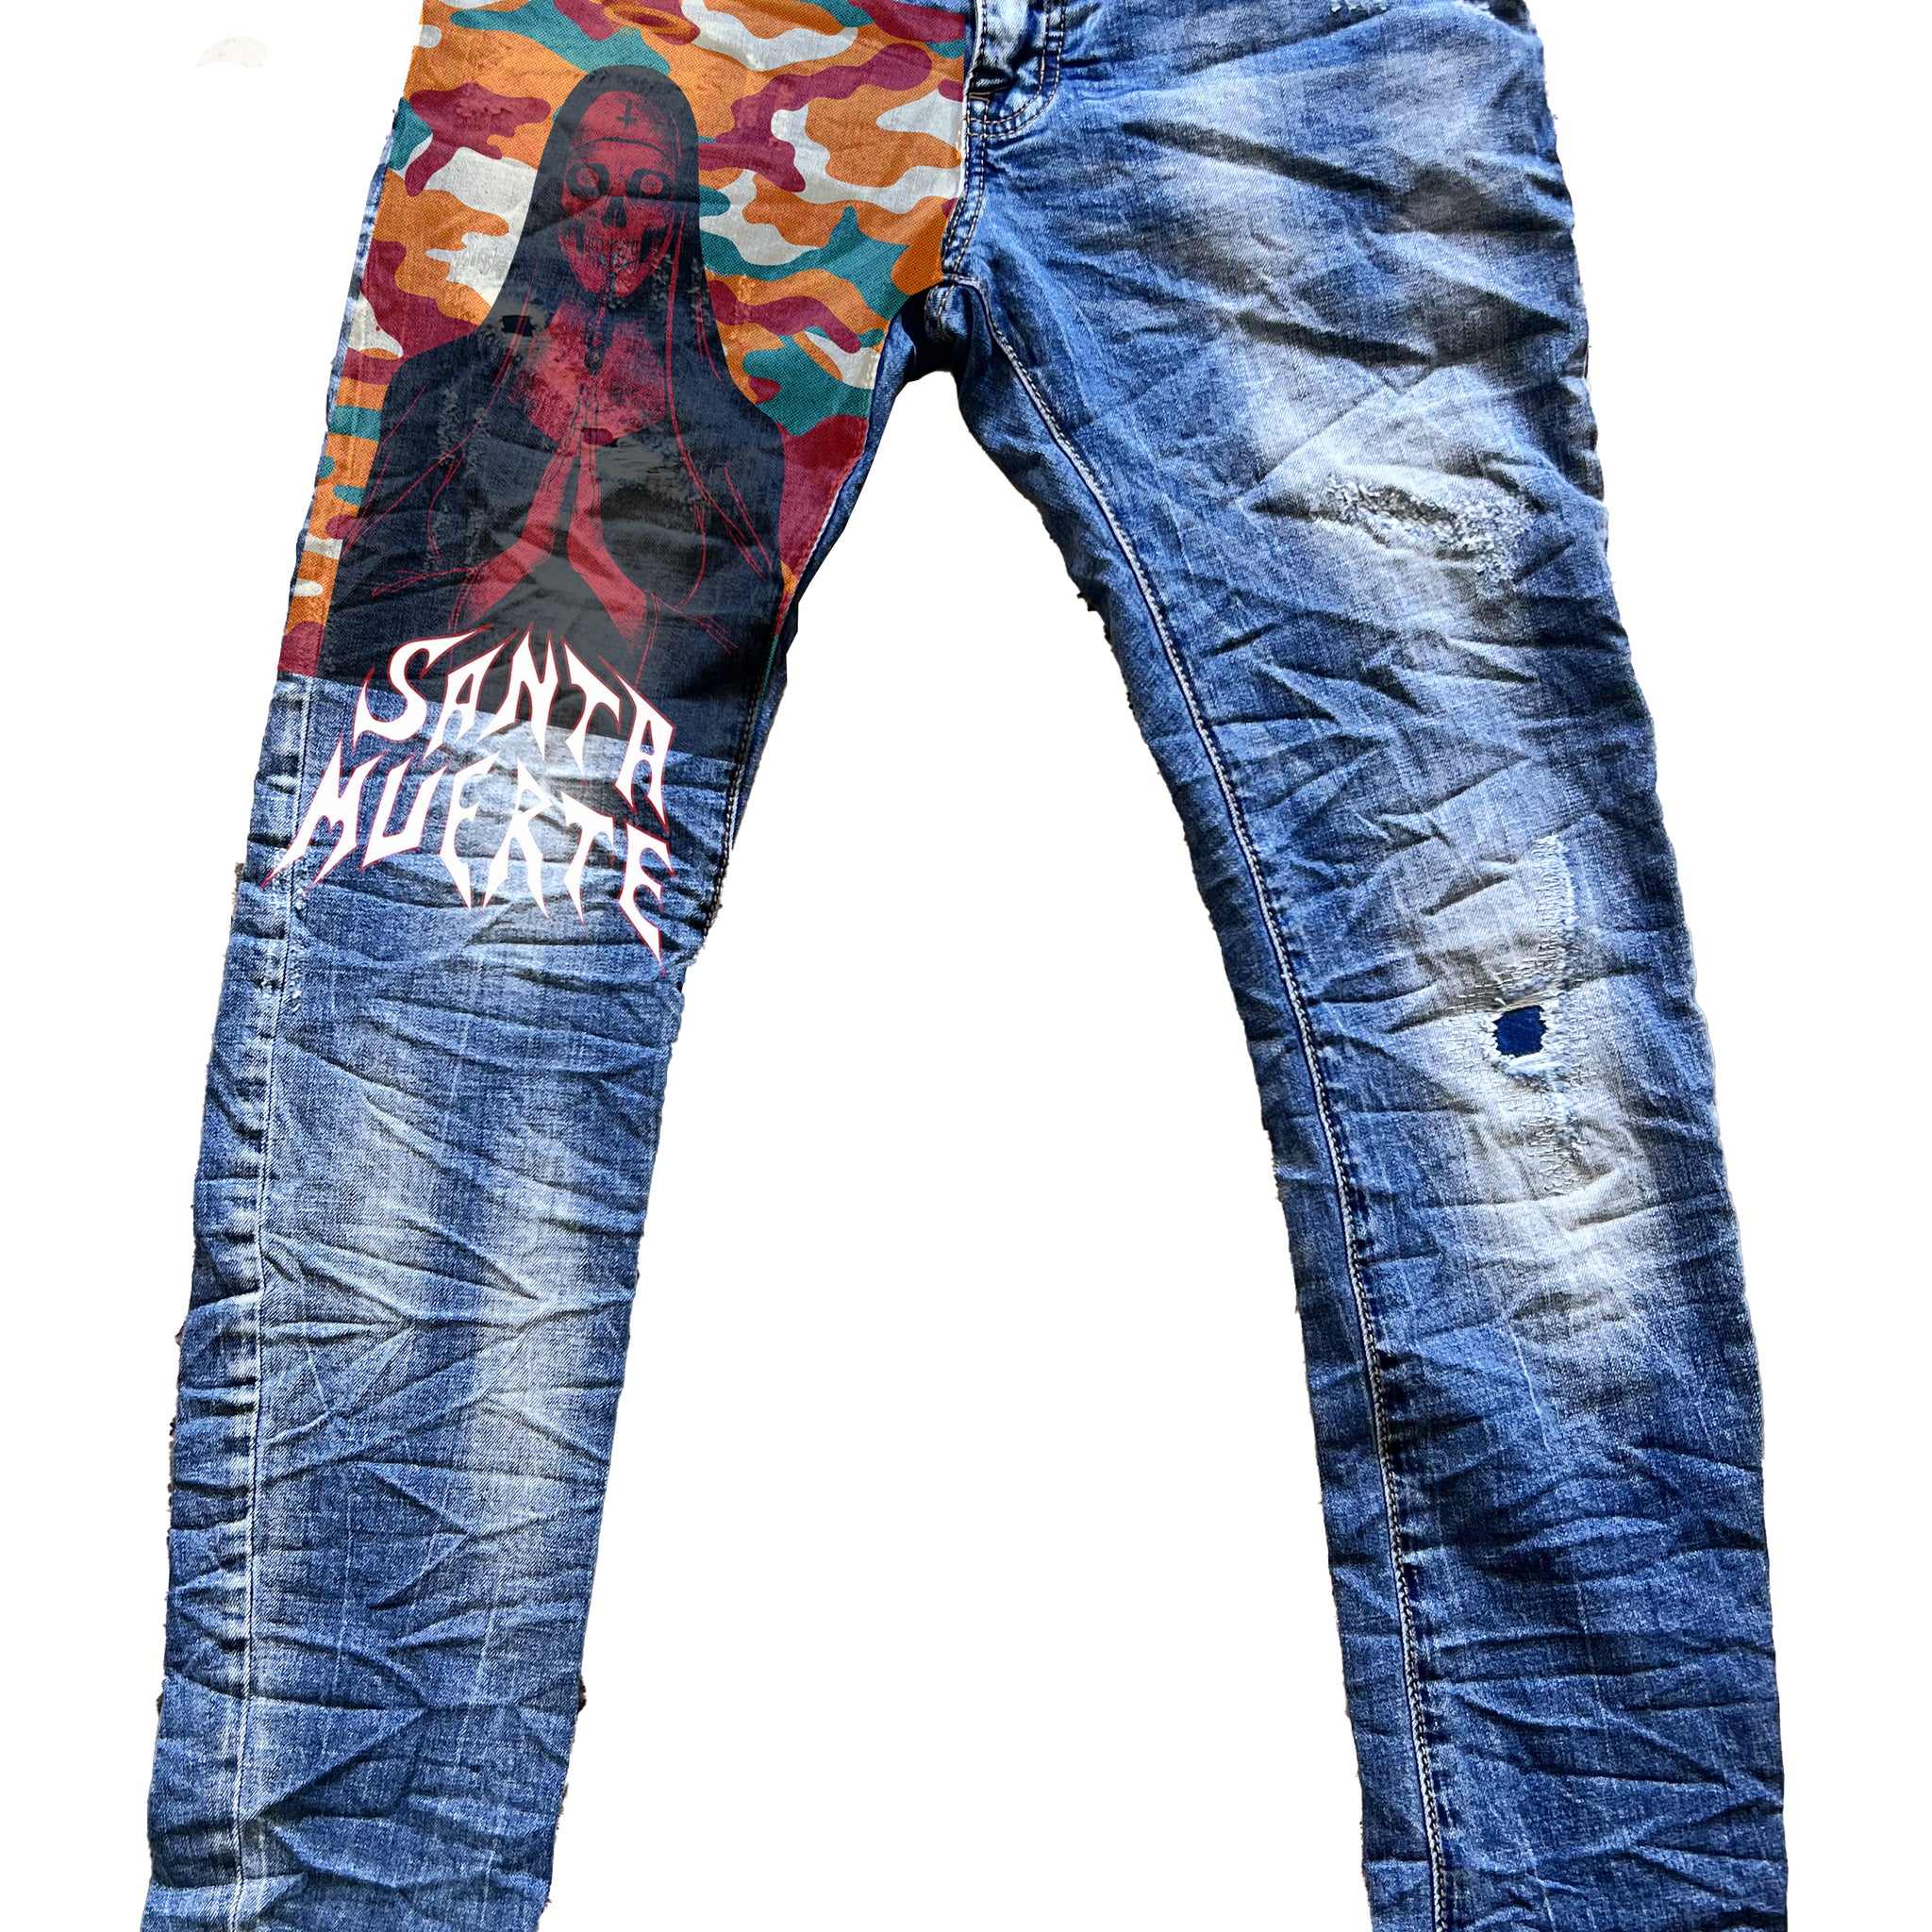 Jeans Santa Muerte